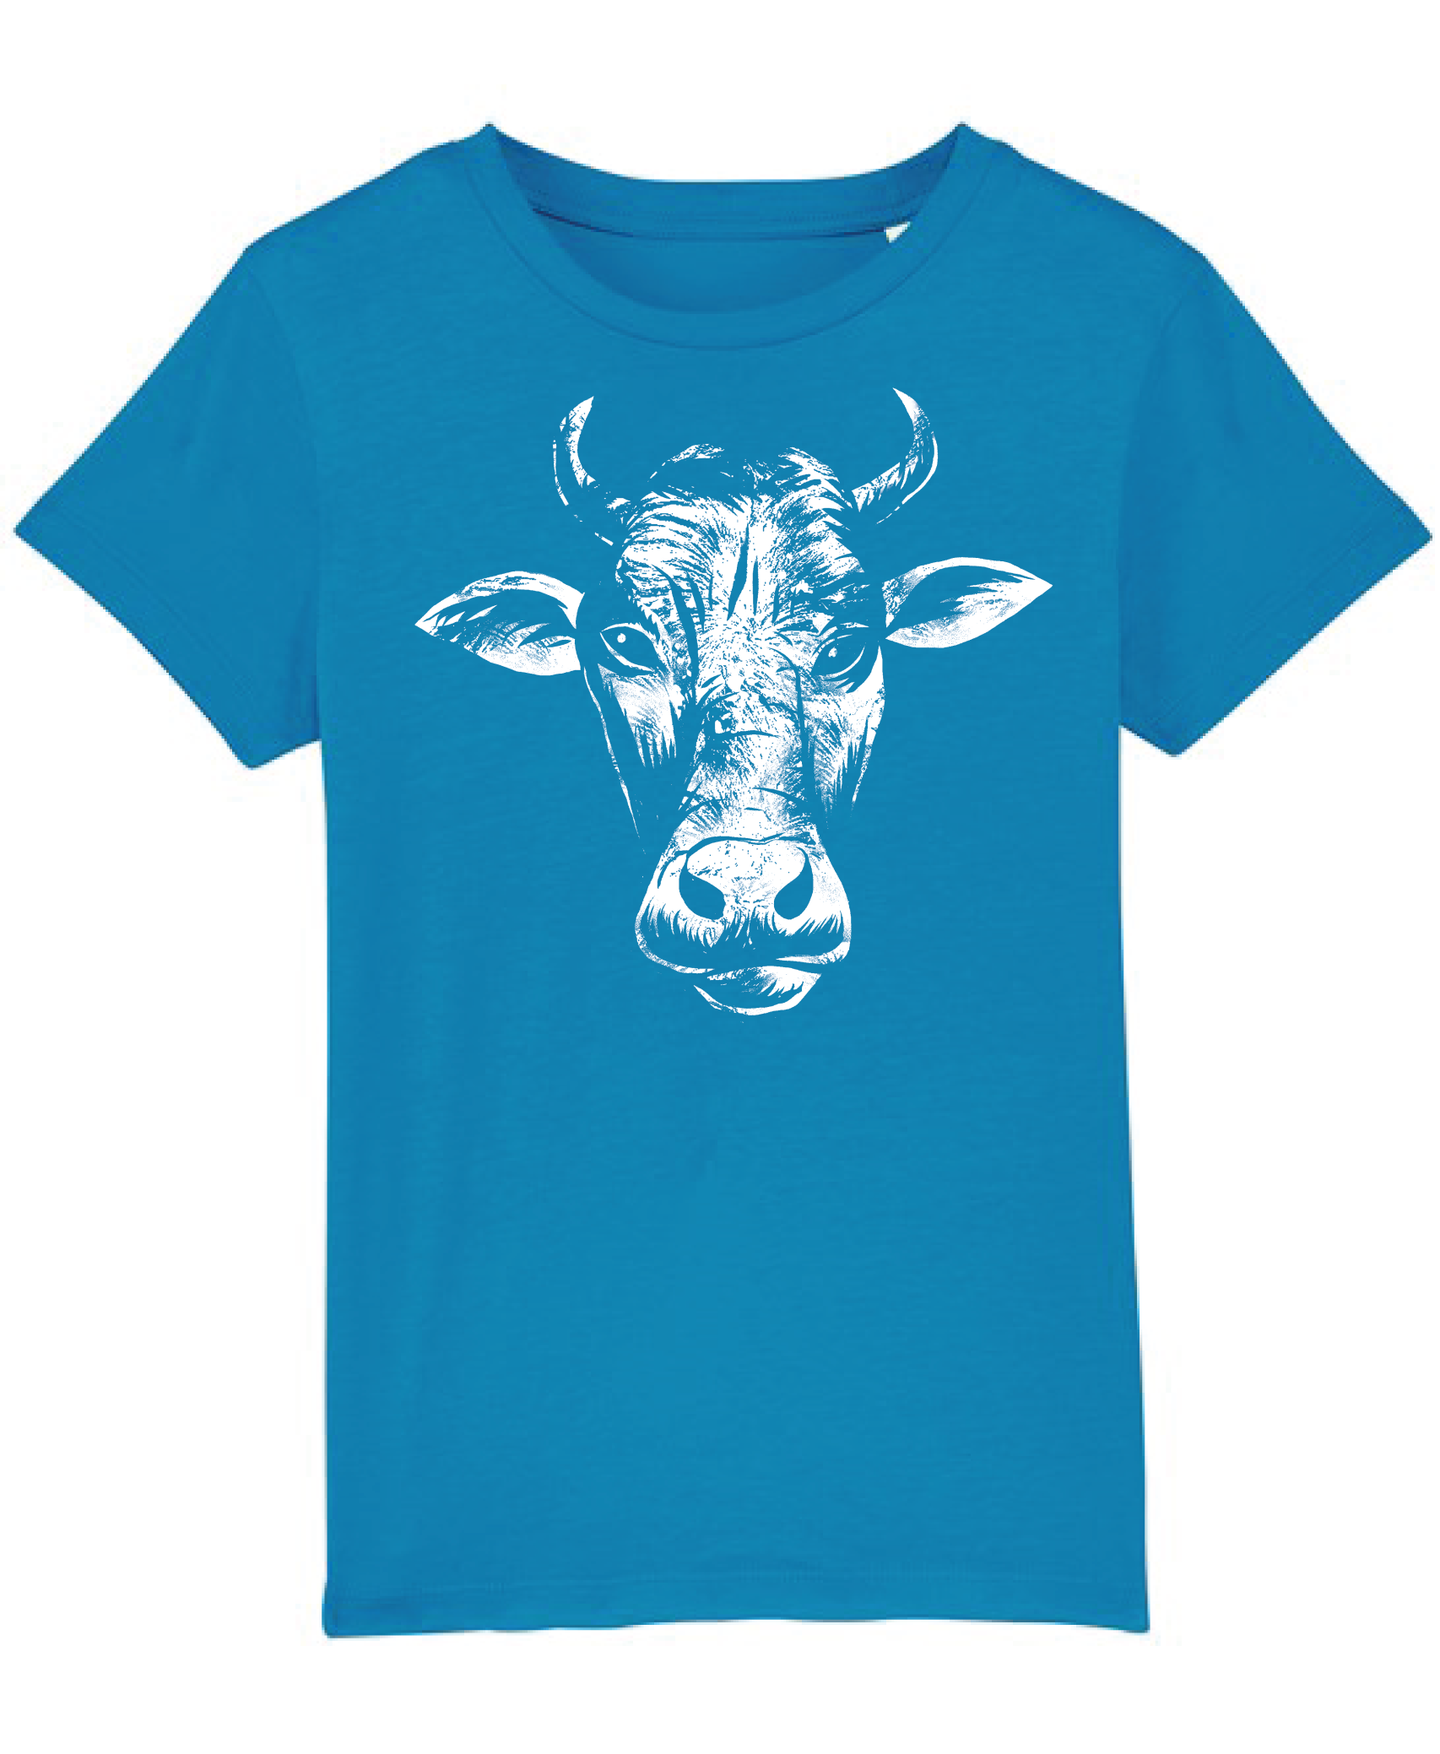 Boys New Azure Organic tee shirt with Bull print